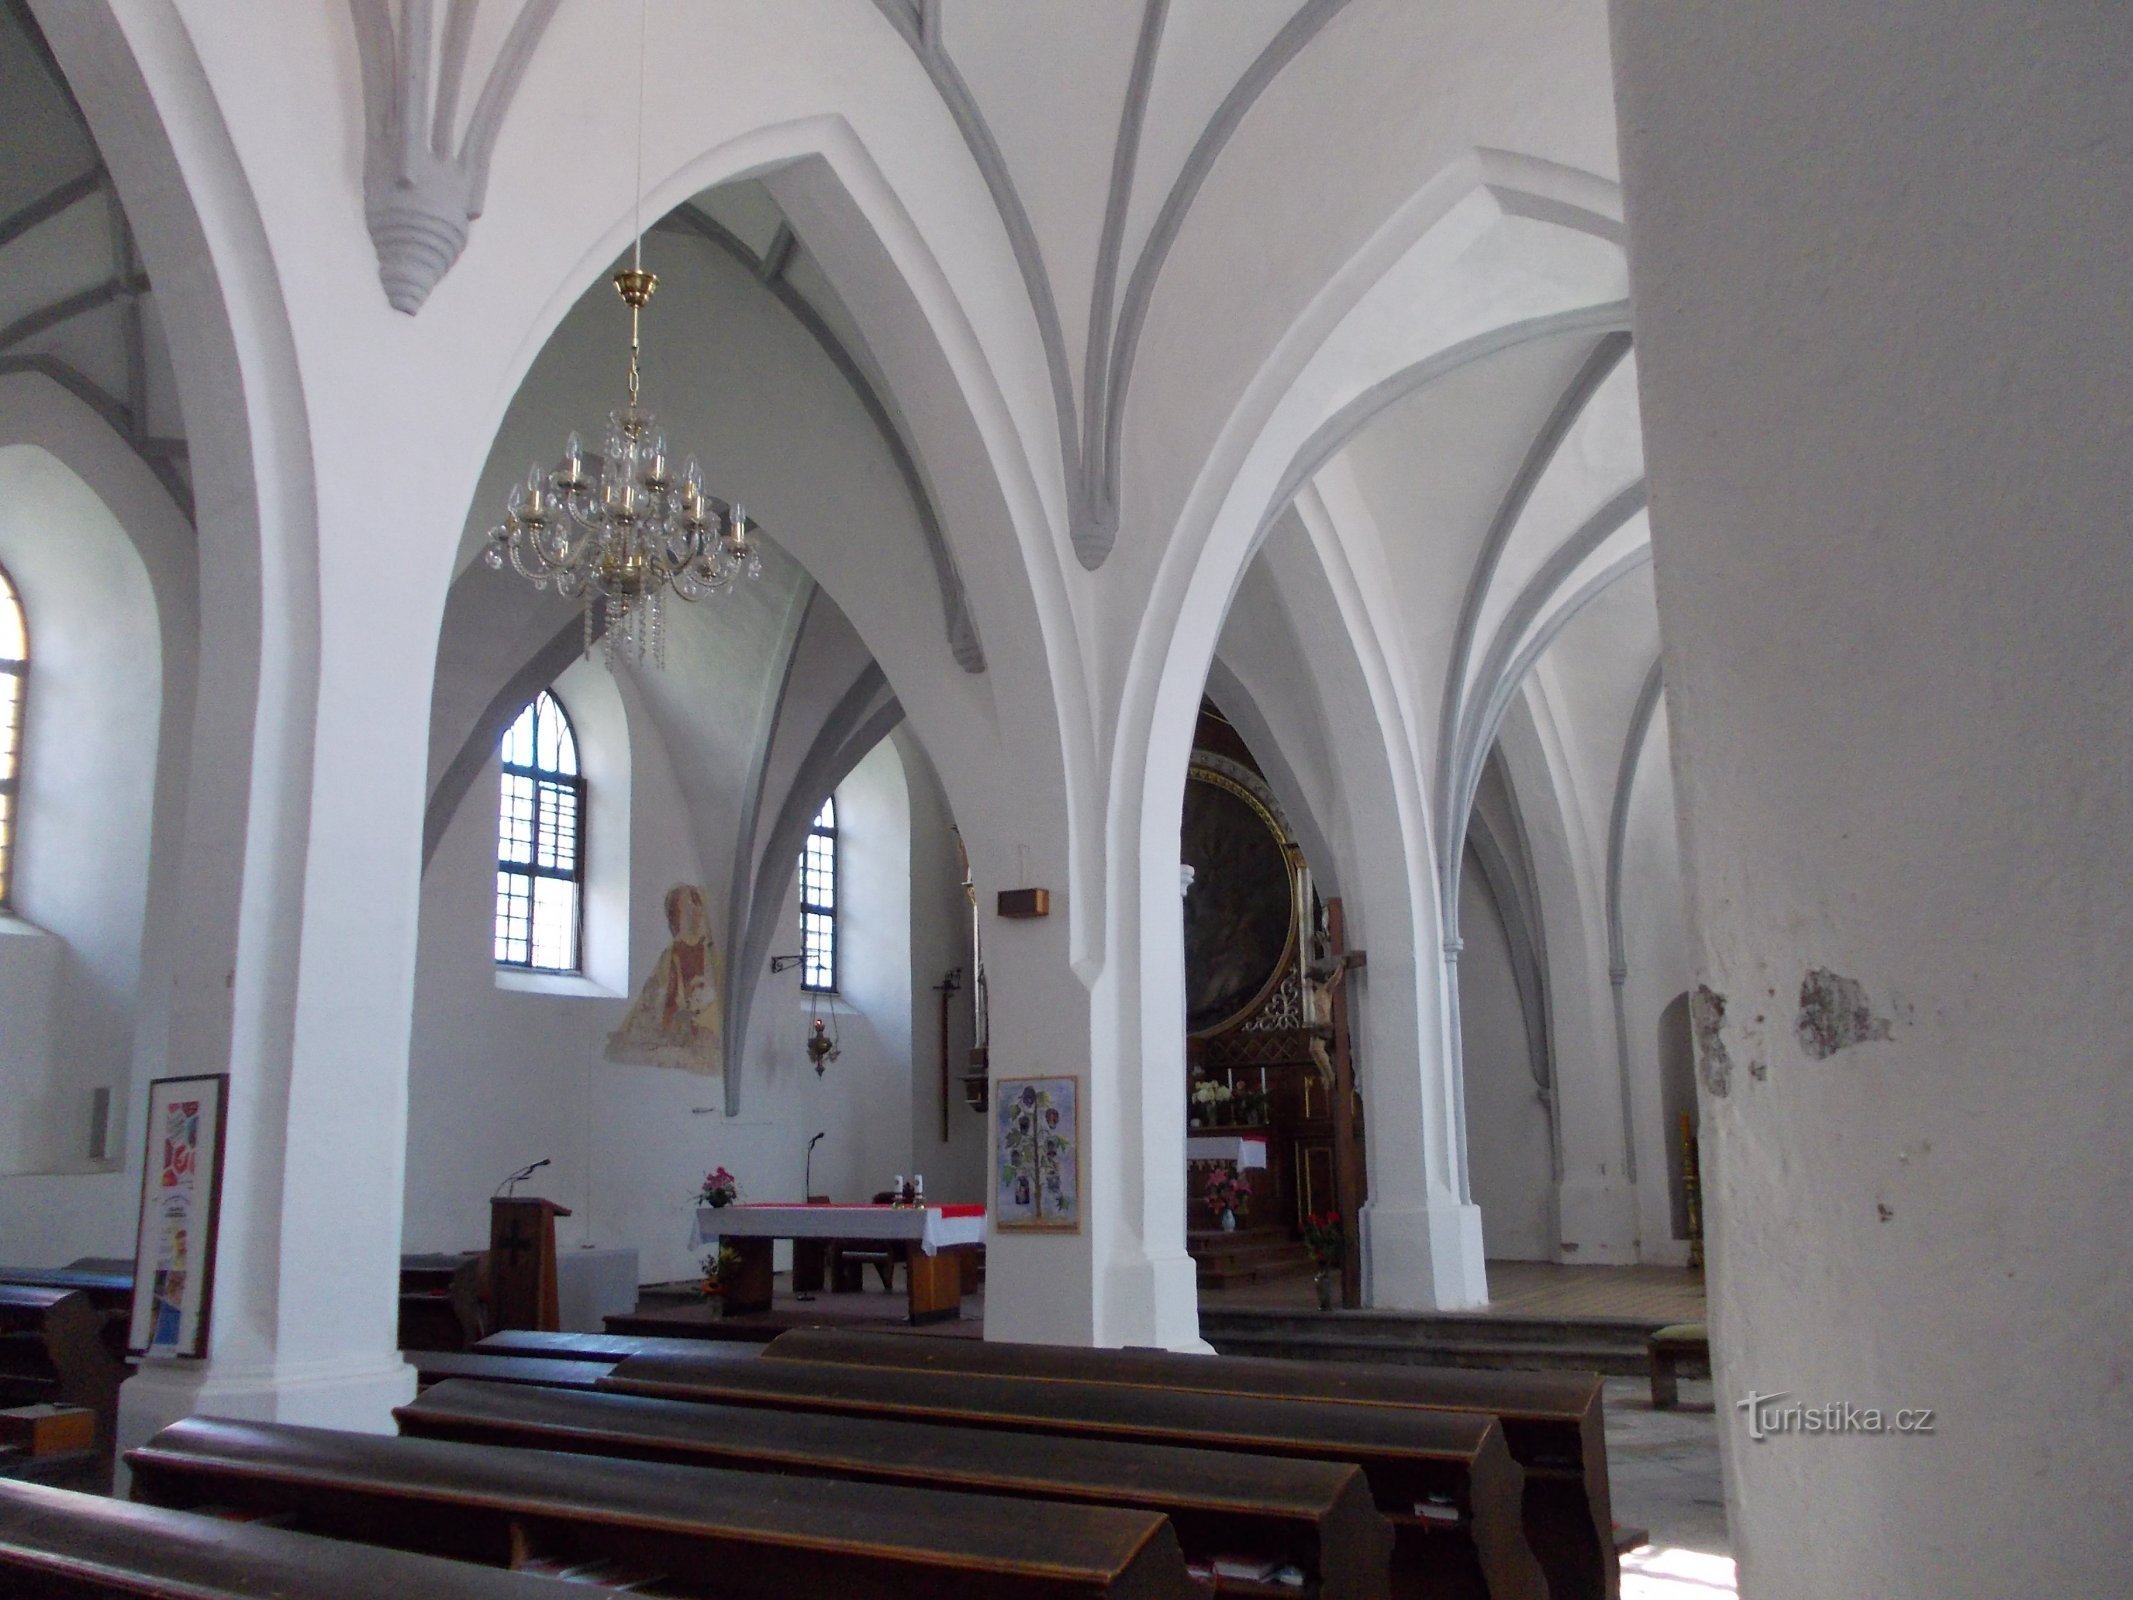 columnas en la nave de la iglesia